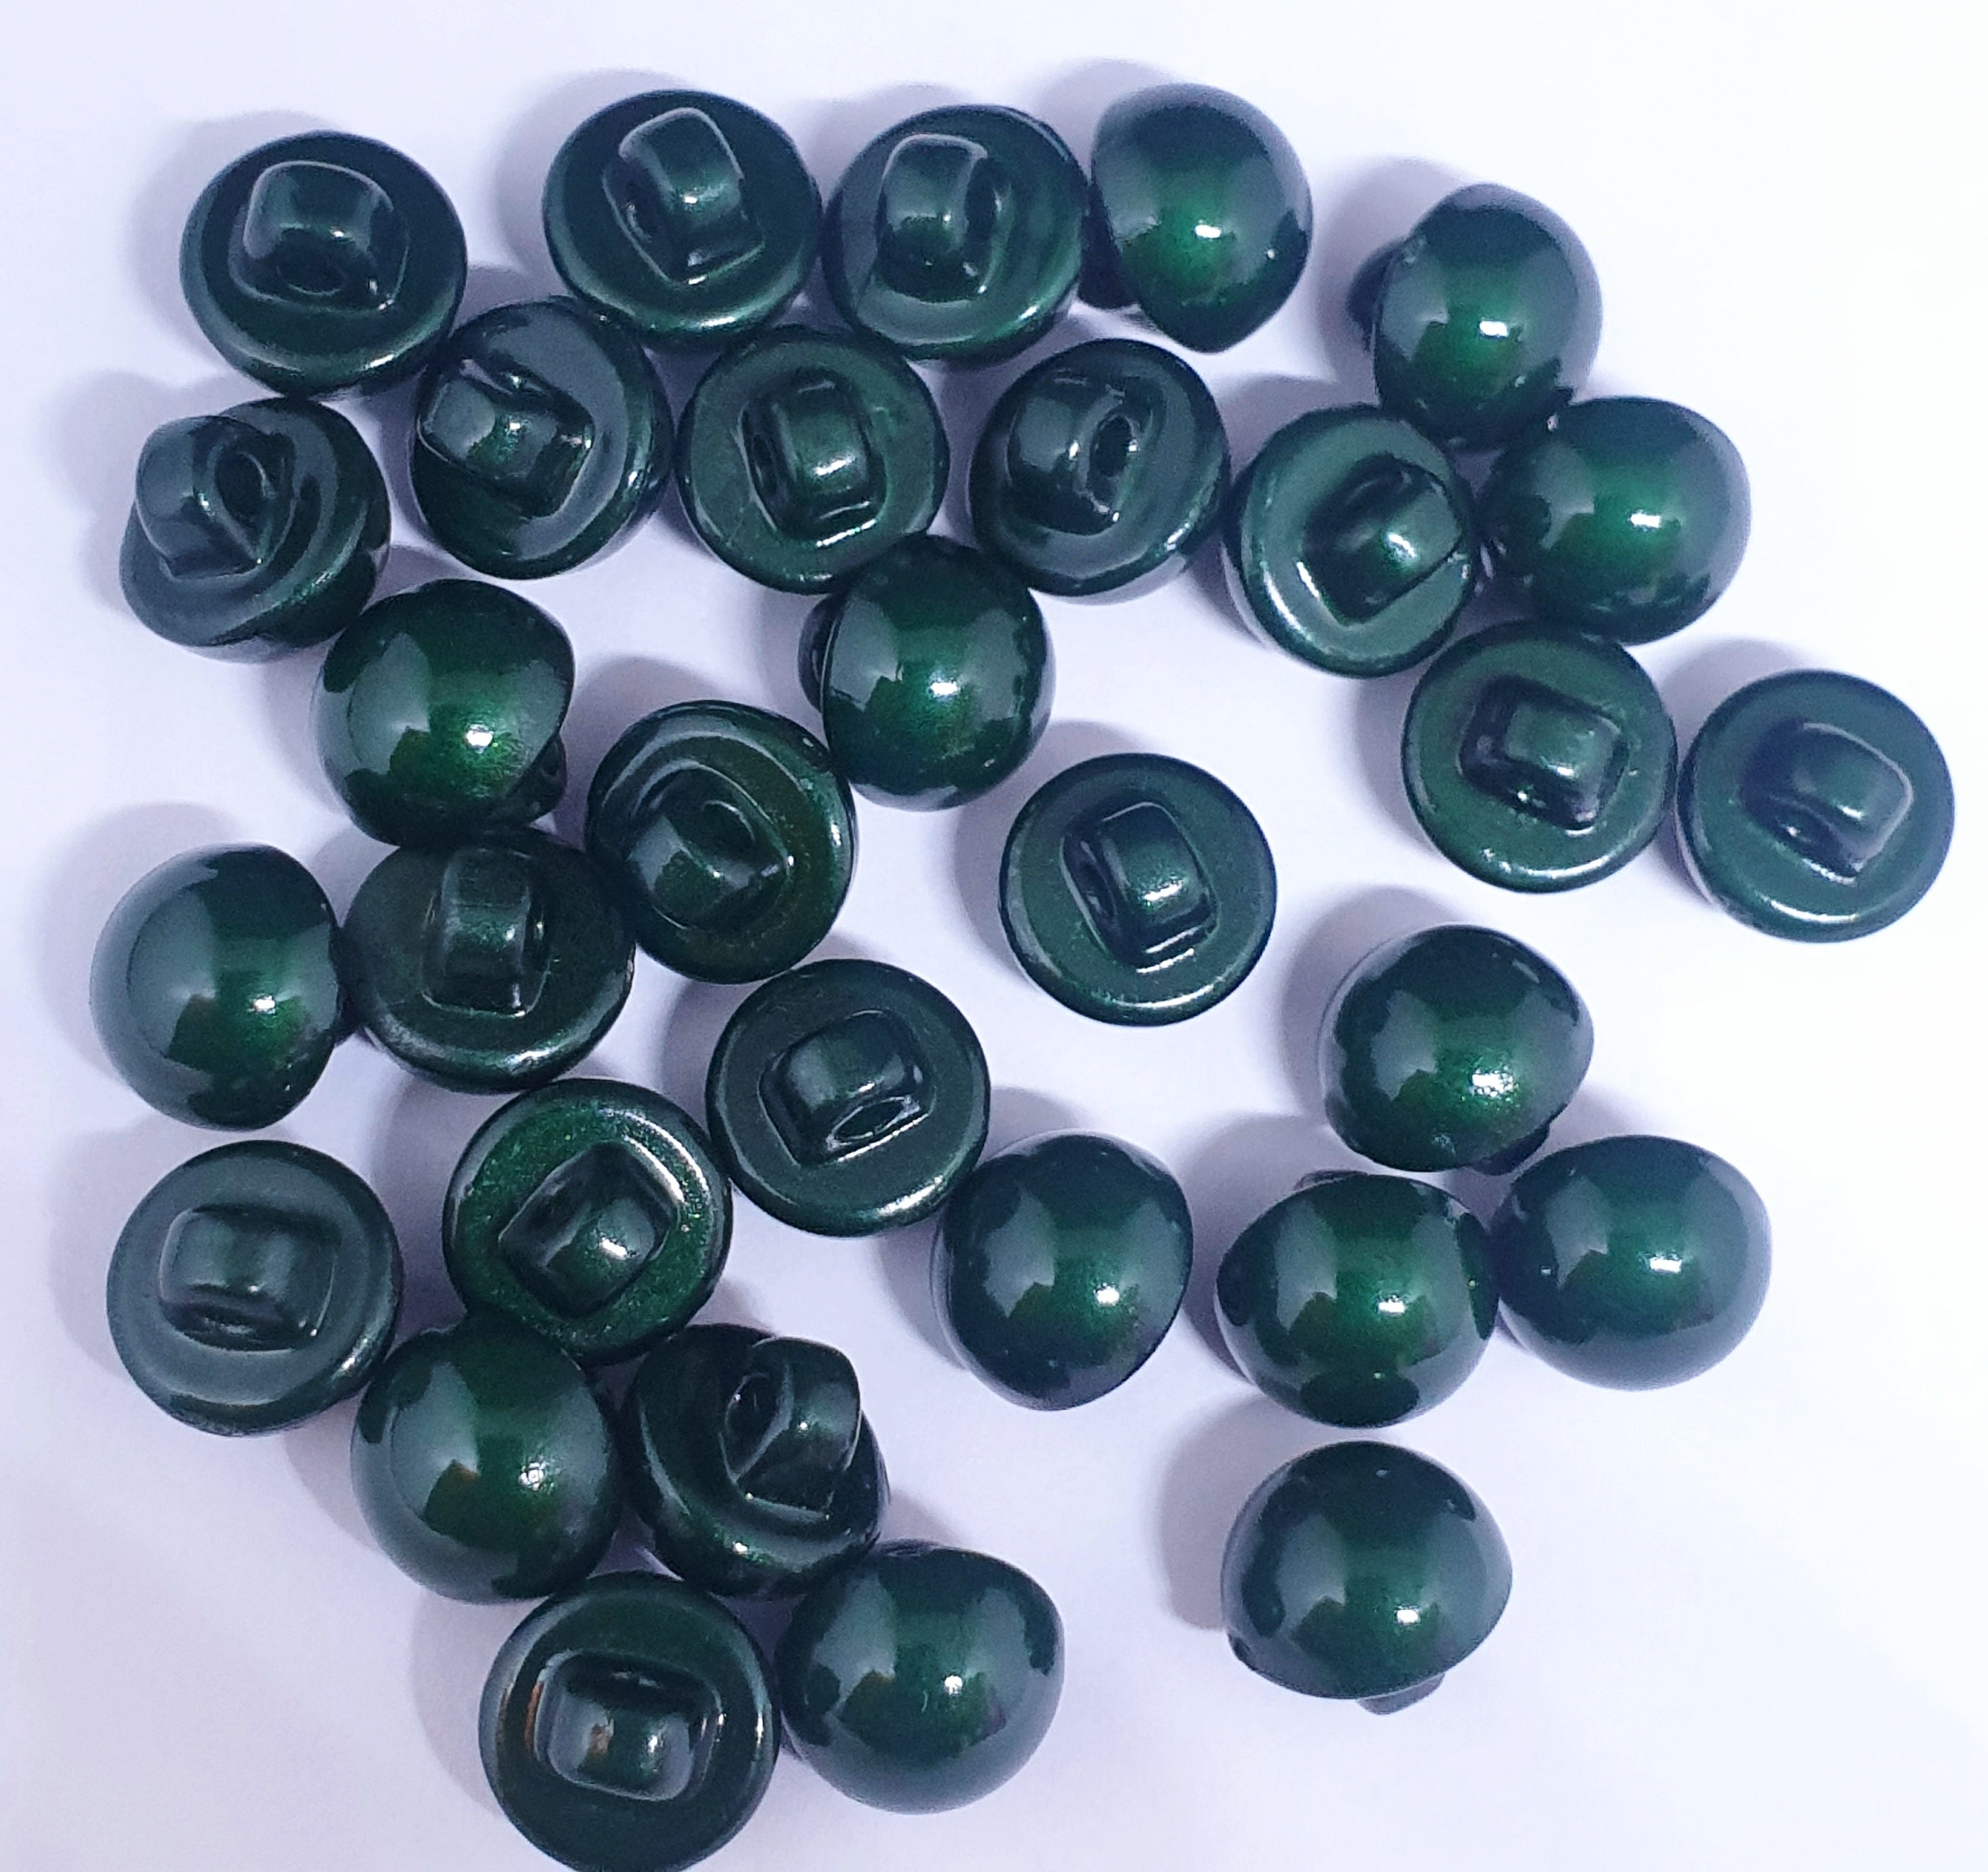 MajorCrafts 30pcs 8mm Dark Green High-Grade Acrylic Small Round Sewing Mushroom Shank Buttons